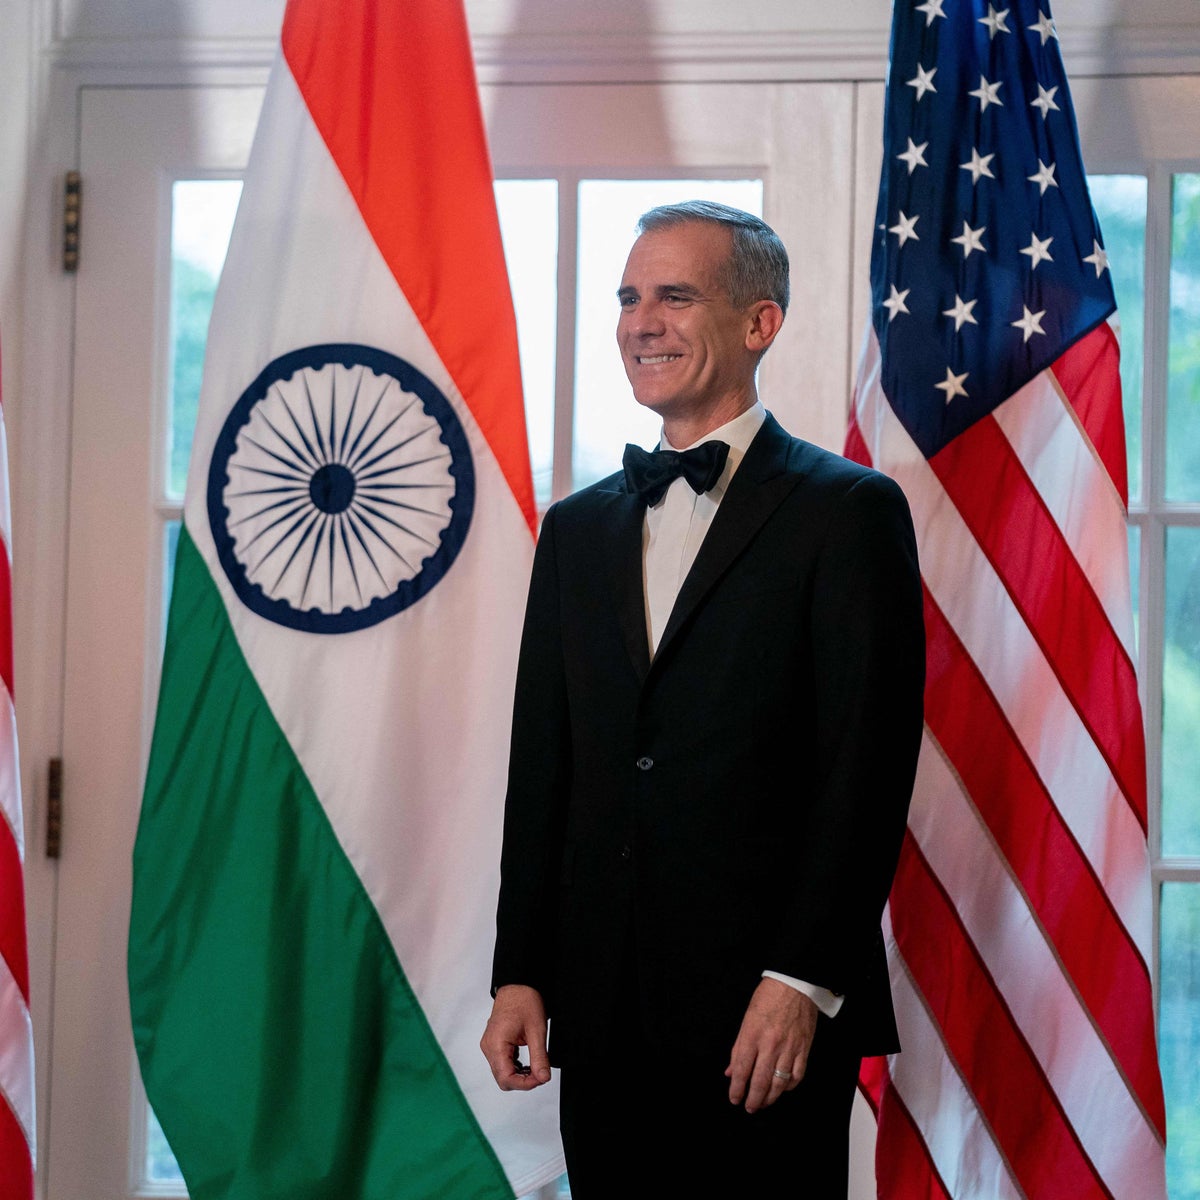 US ambassador tells India government-sponsored assassination plots cross ‘red line’ (independent.co.uk)